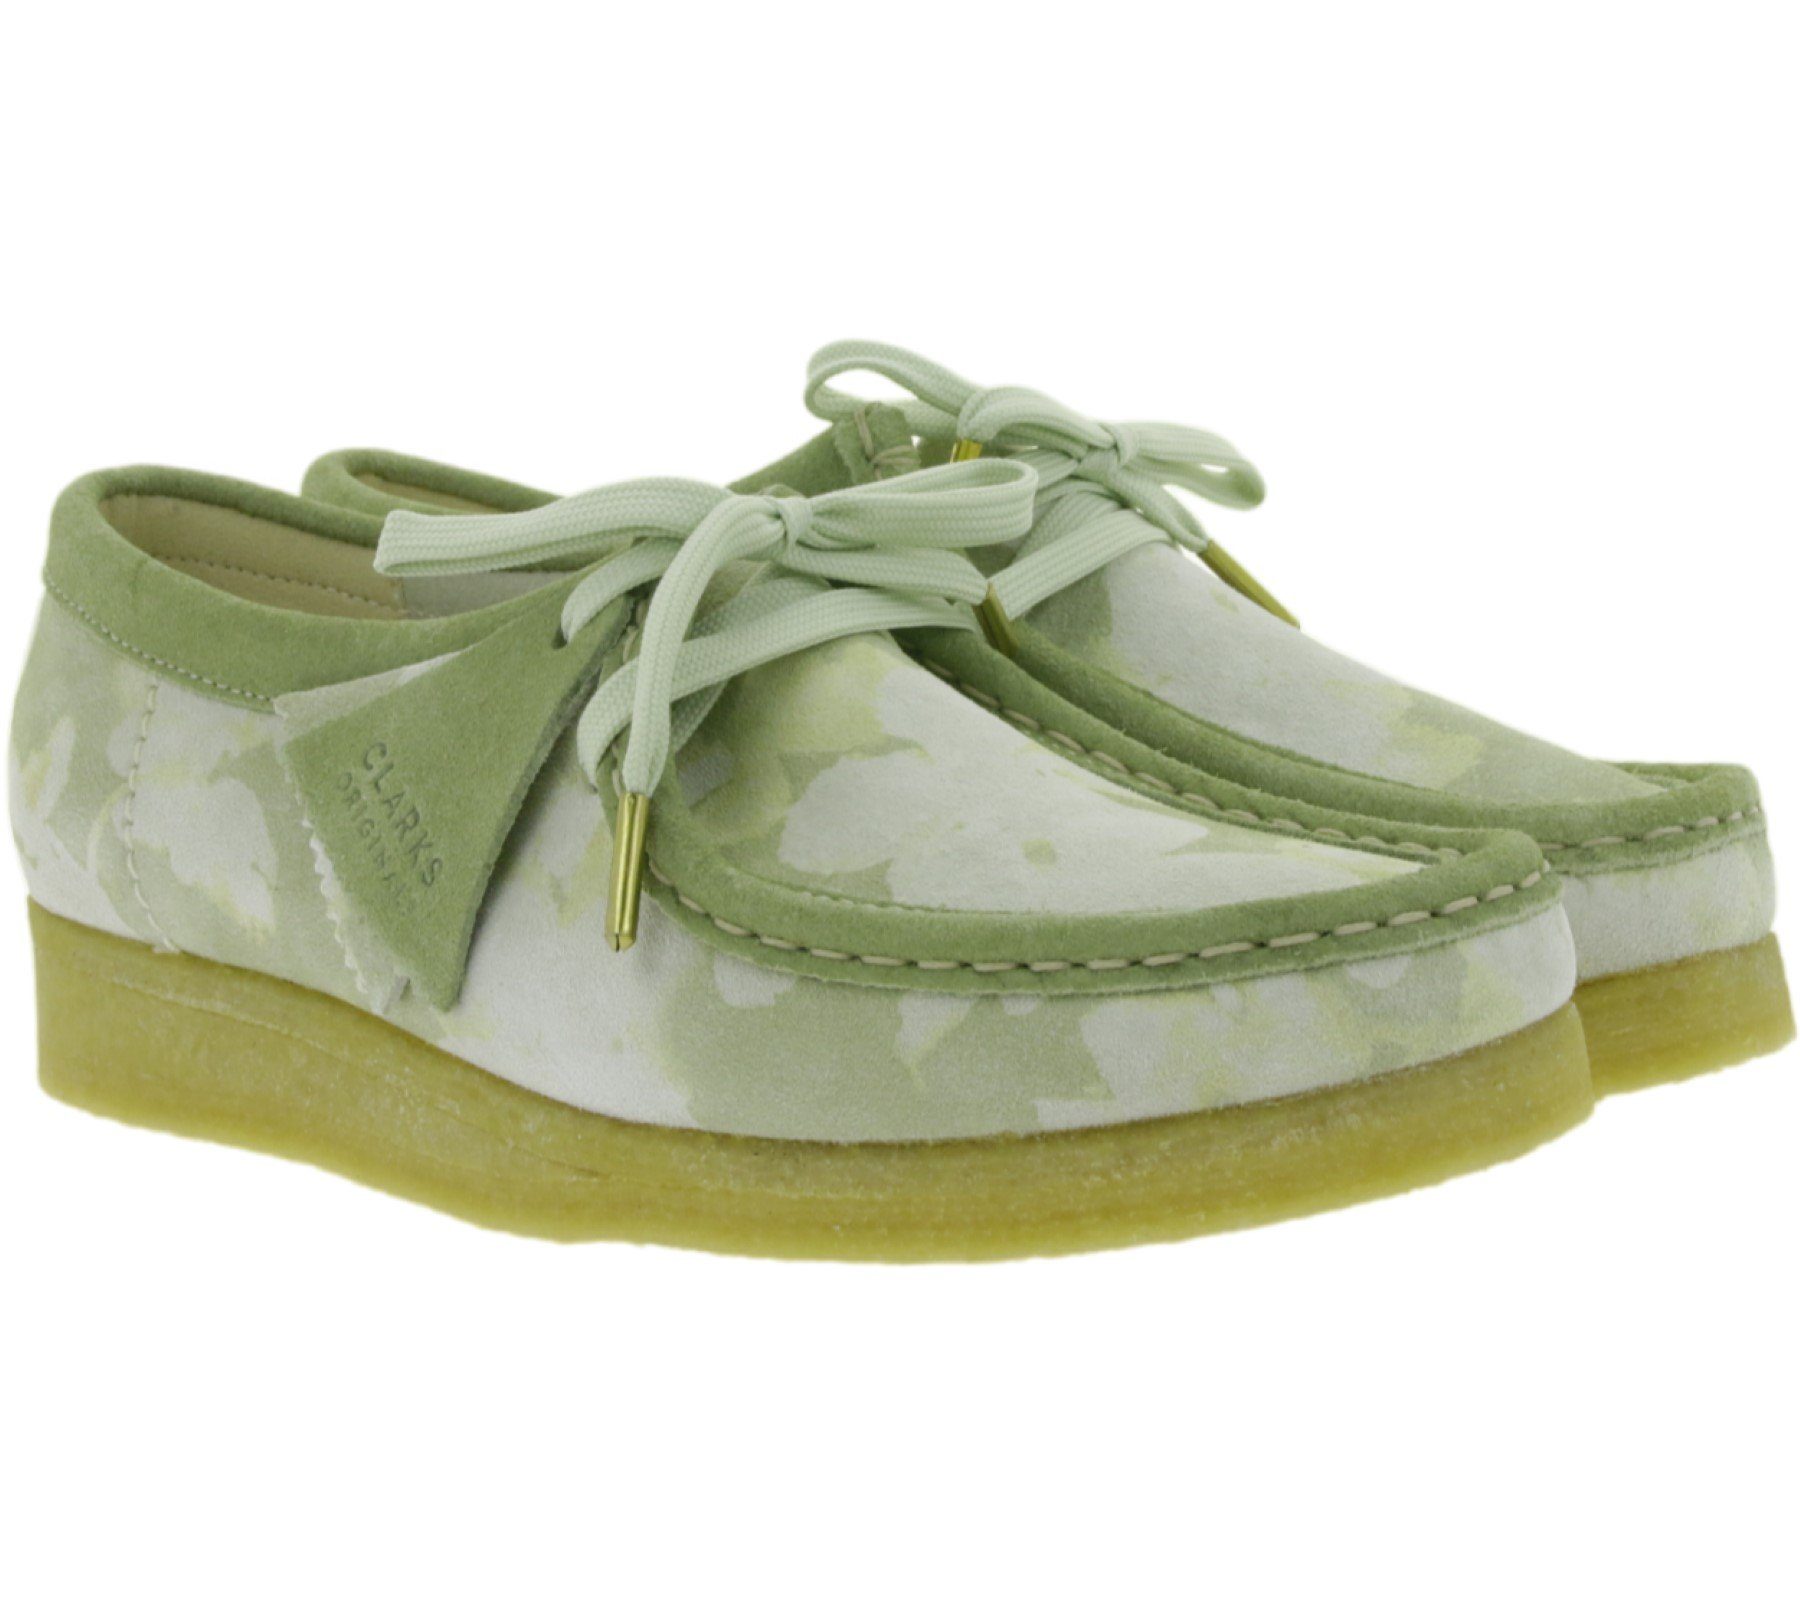 Clarks Clarks Originals Damen Schnürschuhe mit floralem Muster Echtleder-Bootsschuhe Wallabee Halbschuhe Grün Schnürschuh